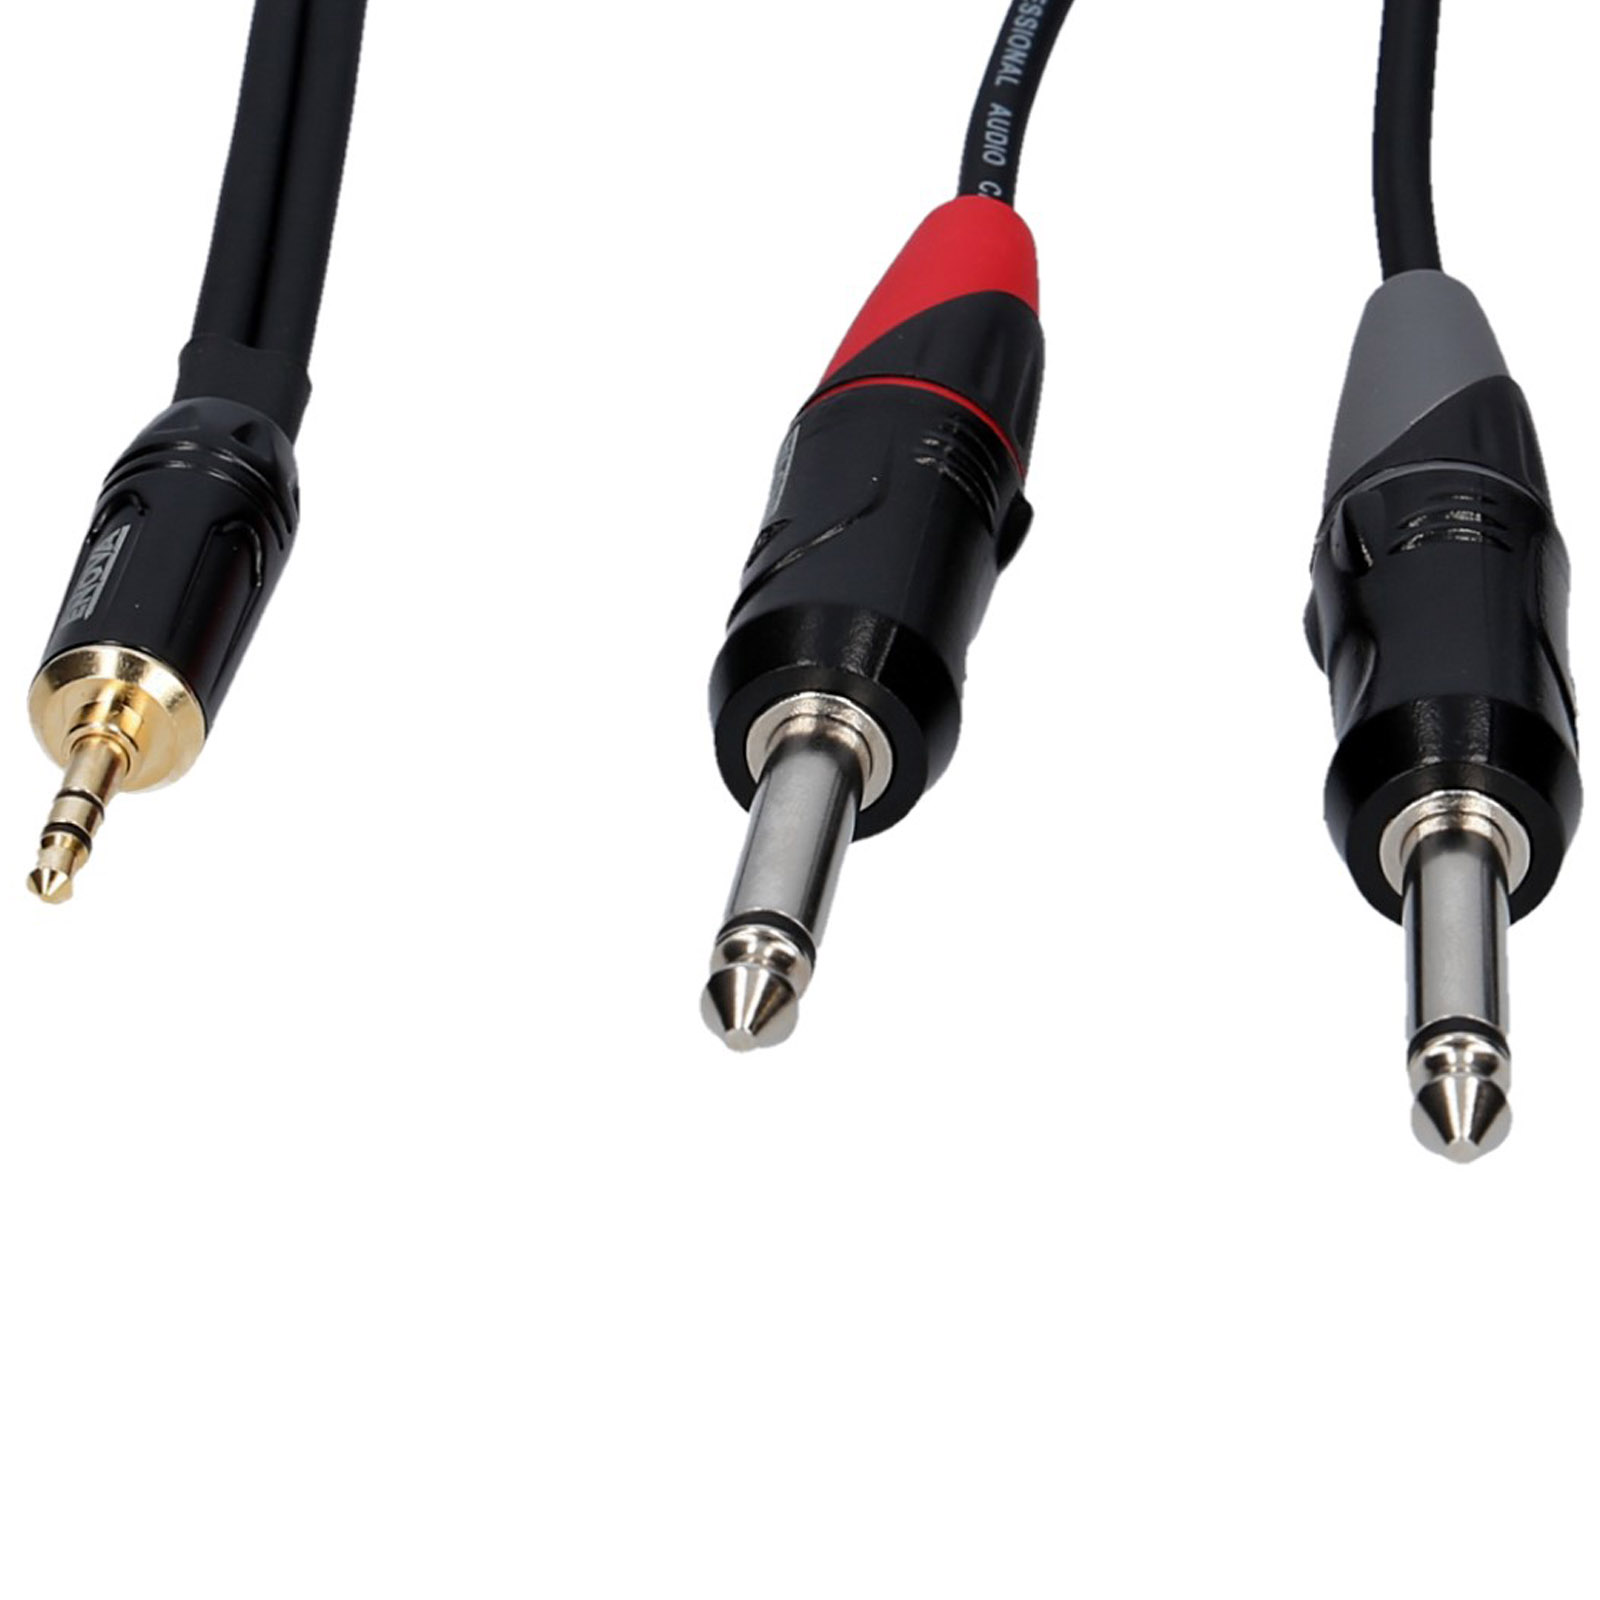 2 mm rot & Miniklinke schwarz Adapterkabel x m Kabel, 3.5 mm - 1 Audio Klinken 6.35 m pol Stereokabel, 1 2 3 Adapter ENOVA pol